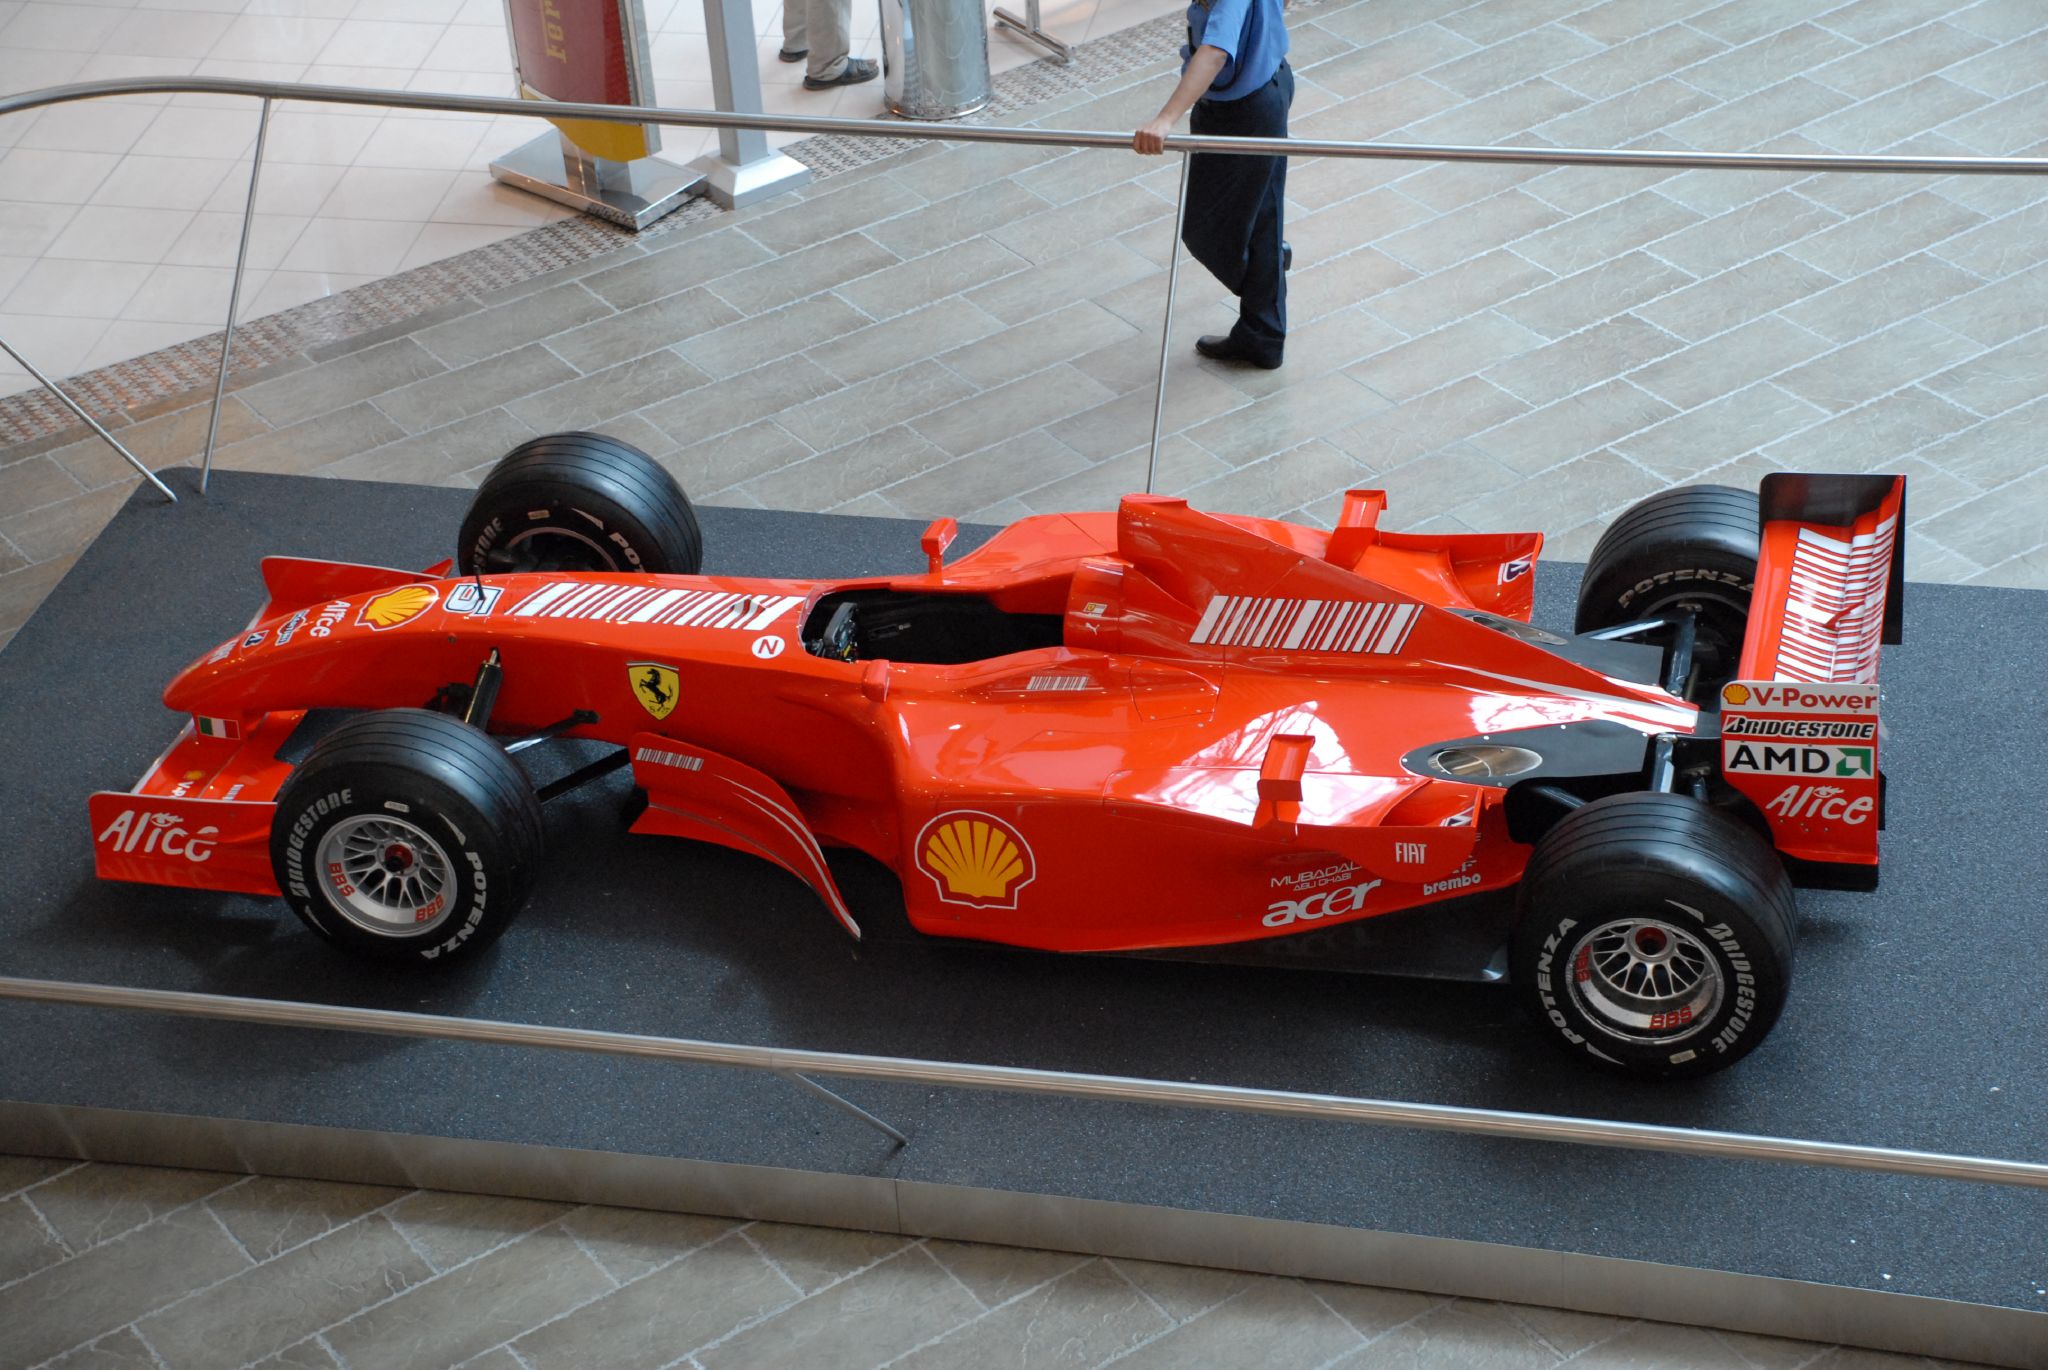 a formula racing car on display at a museum